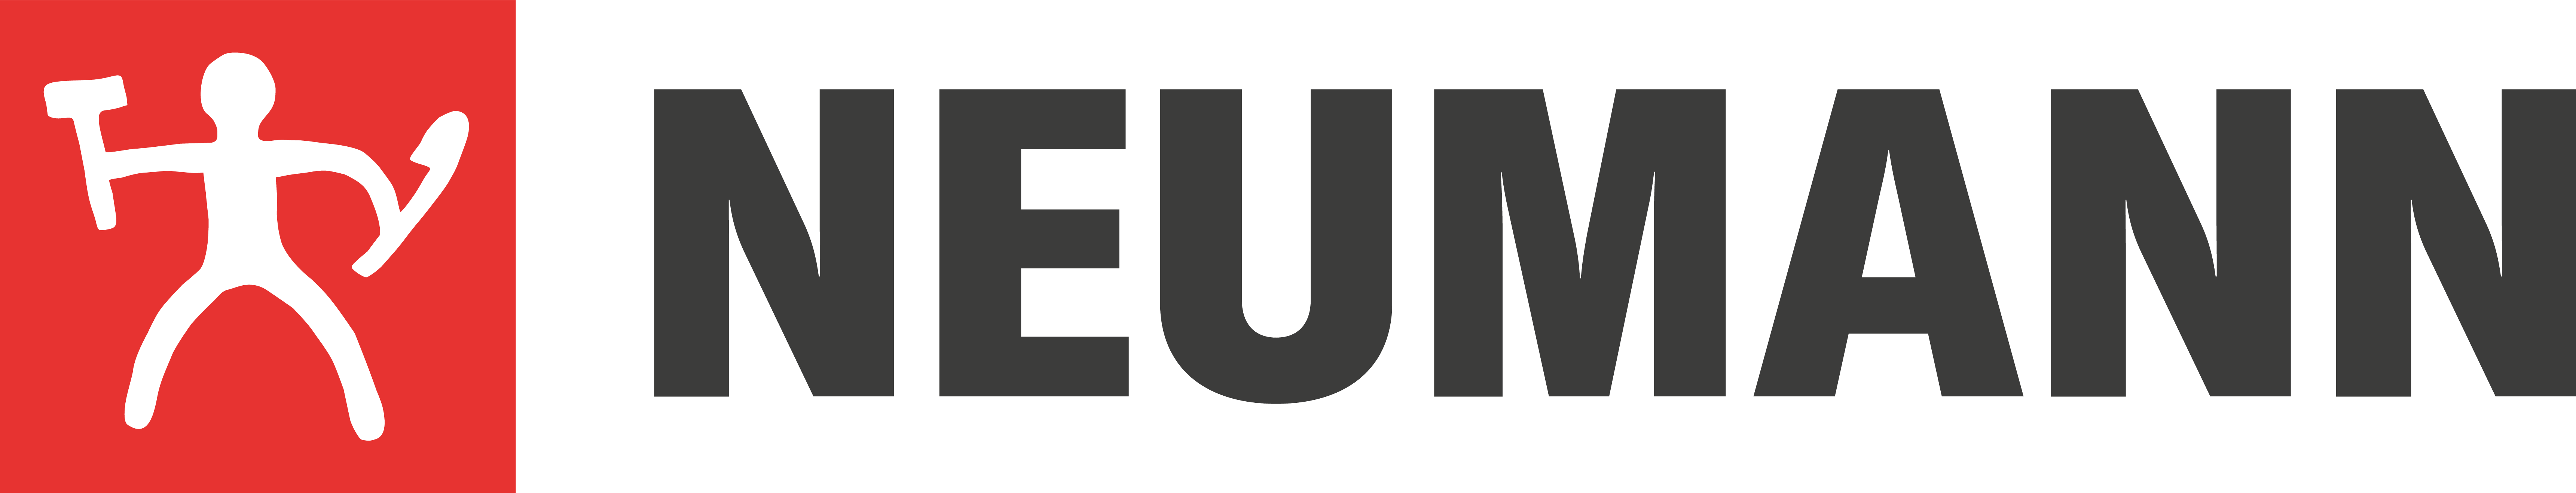 Neumann Bygg logo